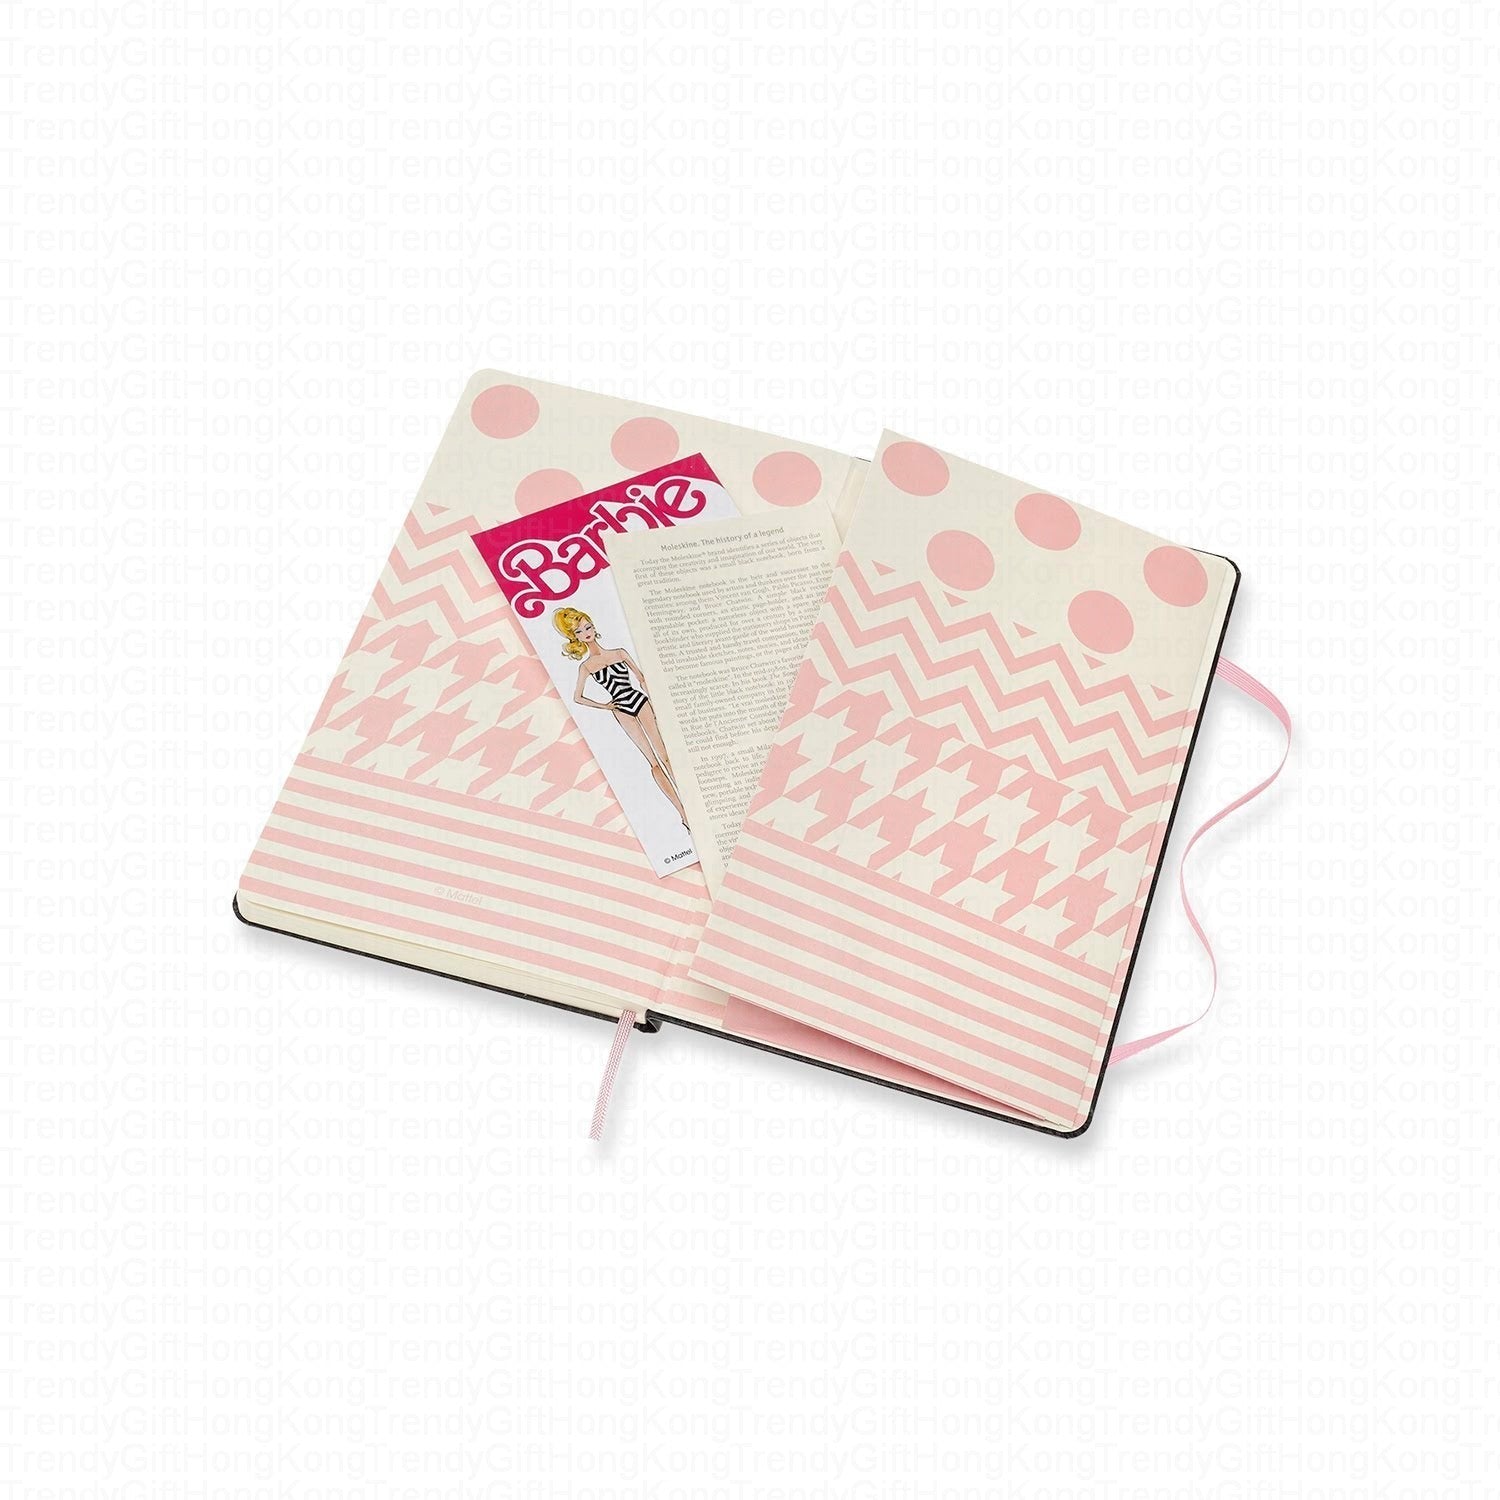 Moleskine Barbie Limited Edition Notebook - Large/Pocket trendygifthk